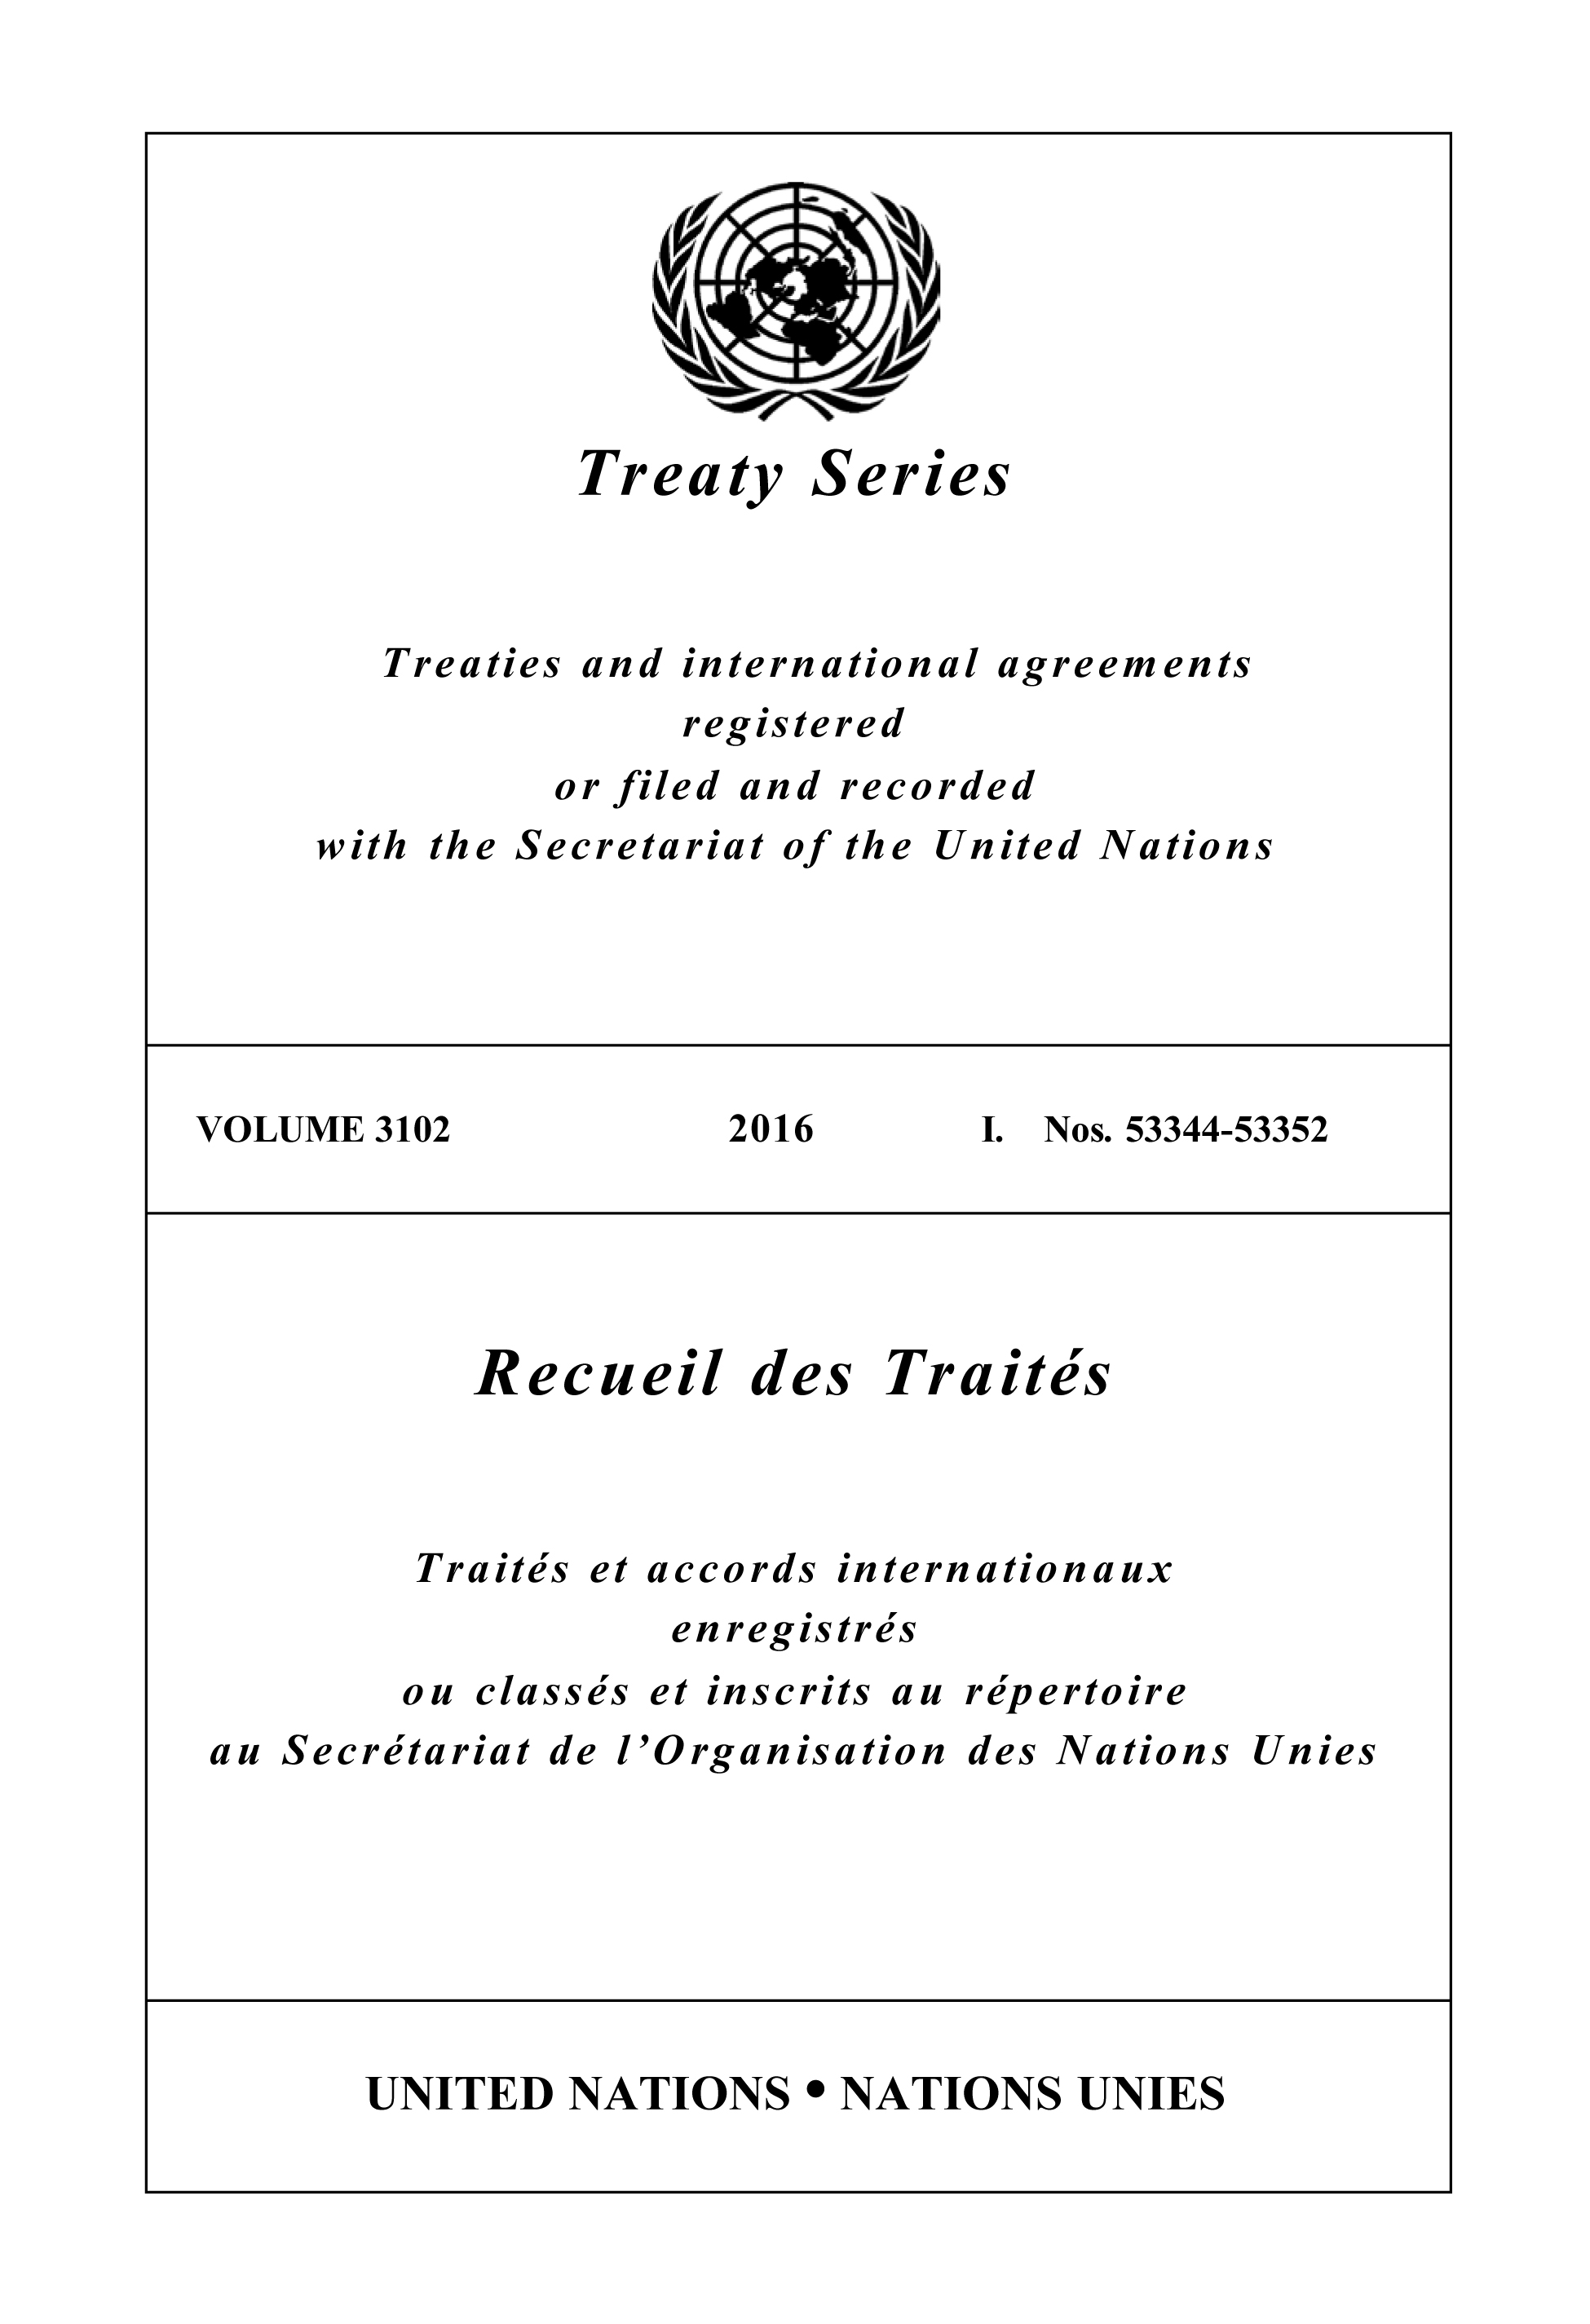 image of Treaty Series 3102